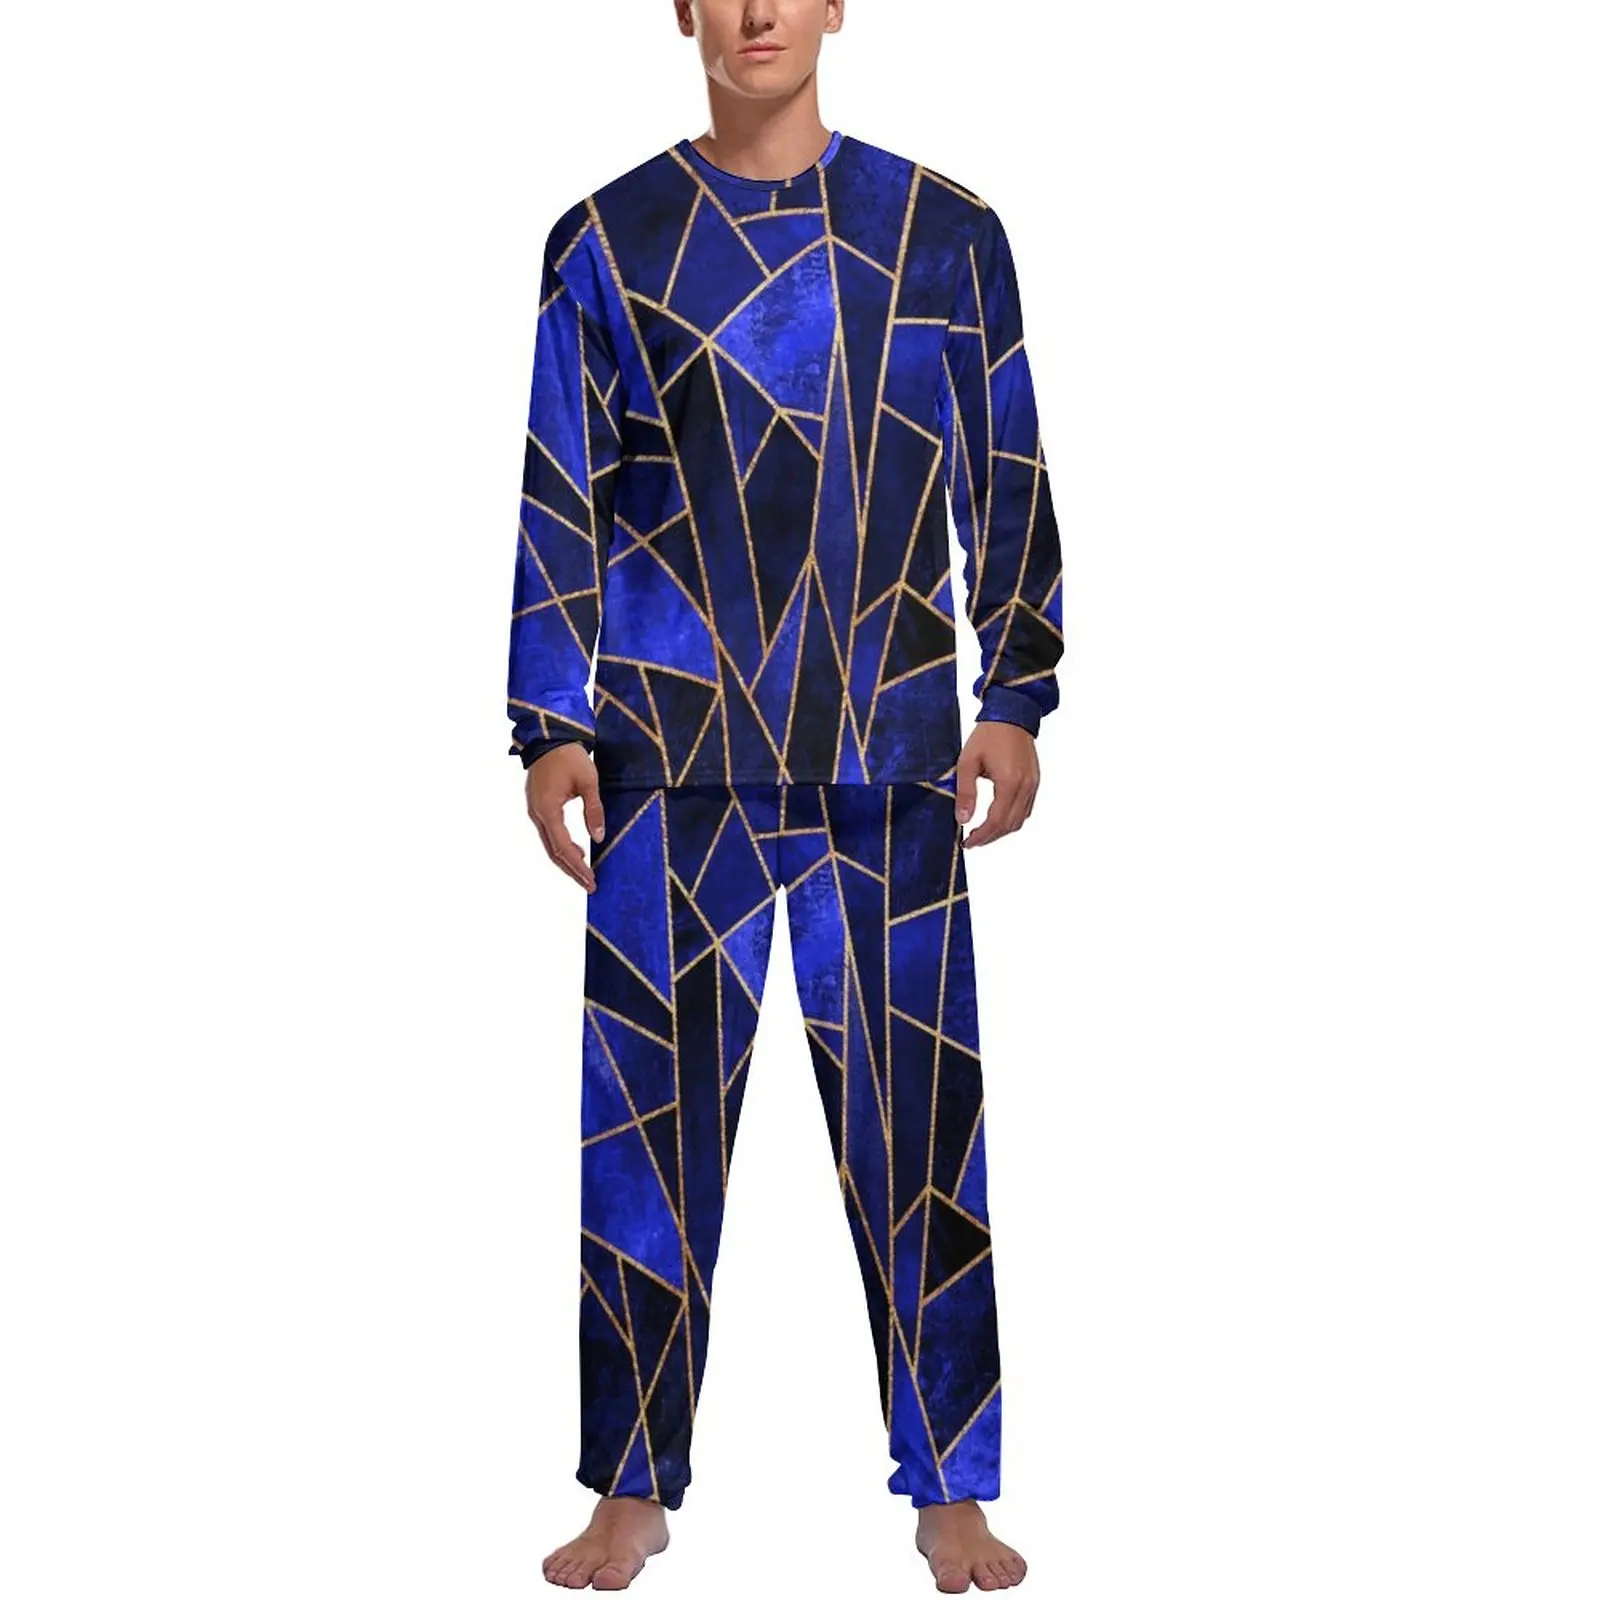 Blue Geometry Pajamas Gold Line Print Men Long Sleeves Elegant Pajama Sets 2 Pieces Night Spring Printed Home Suit Gift Idea